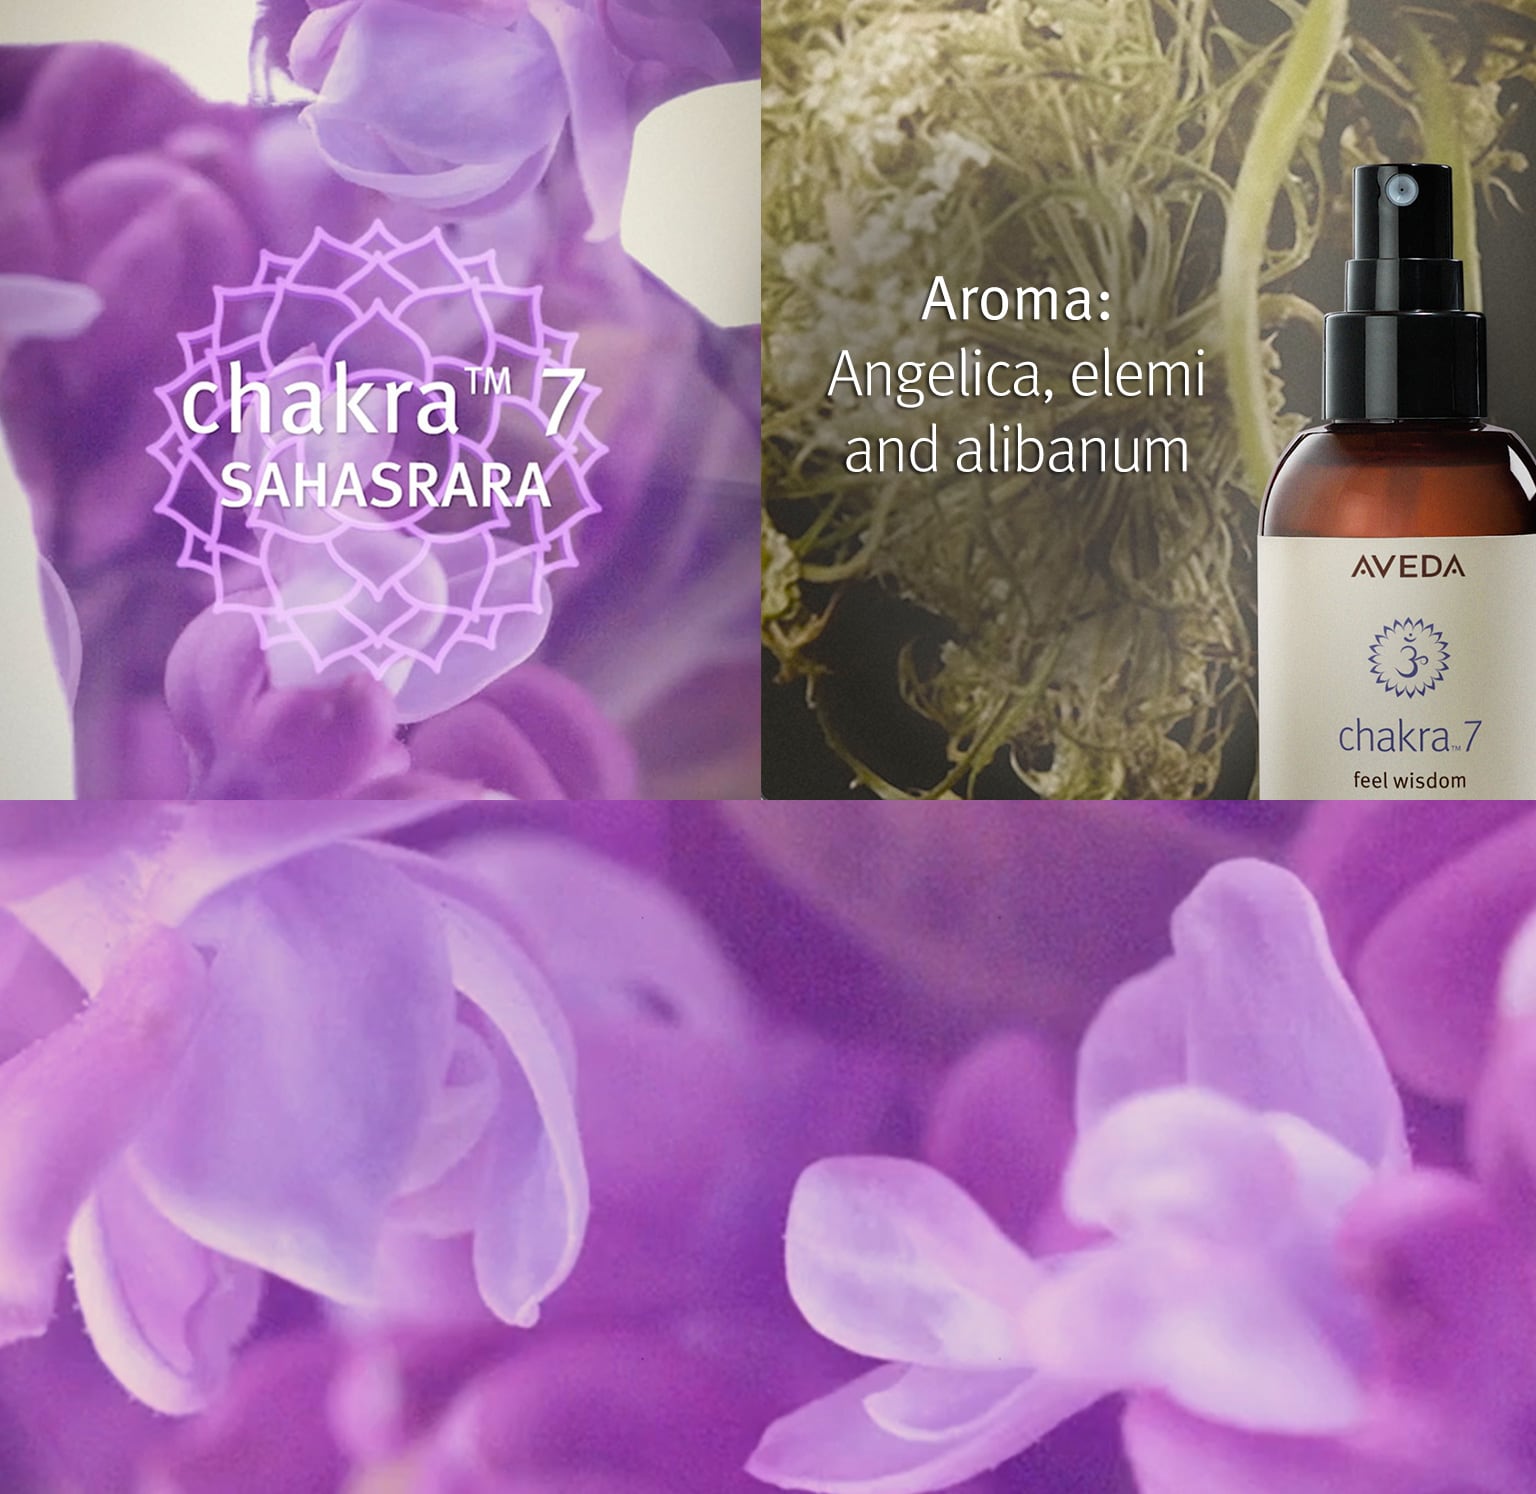 Chakra 7 aroma includes angelica, elemi and olibanum